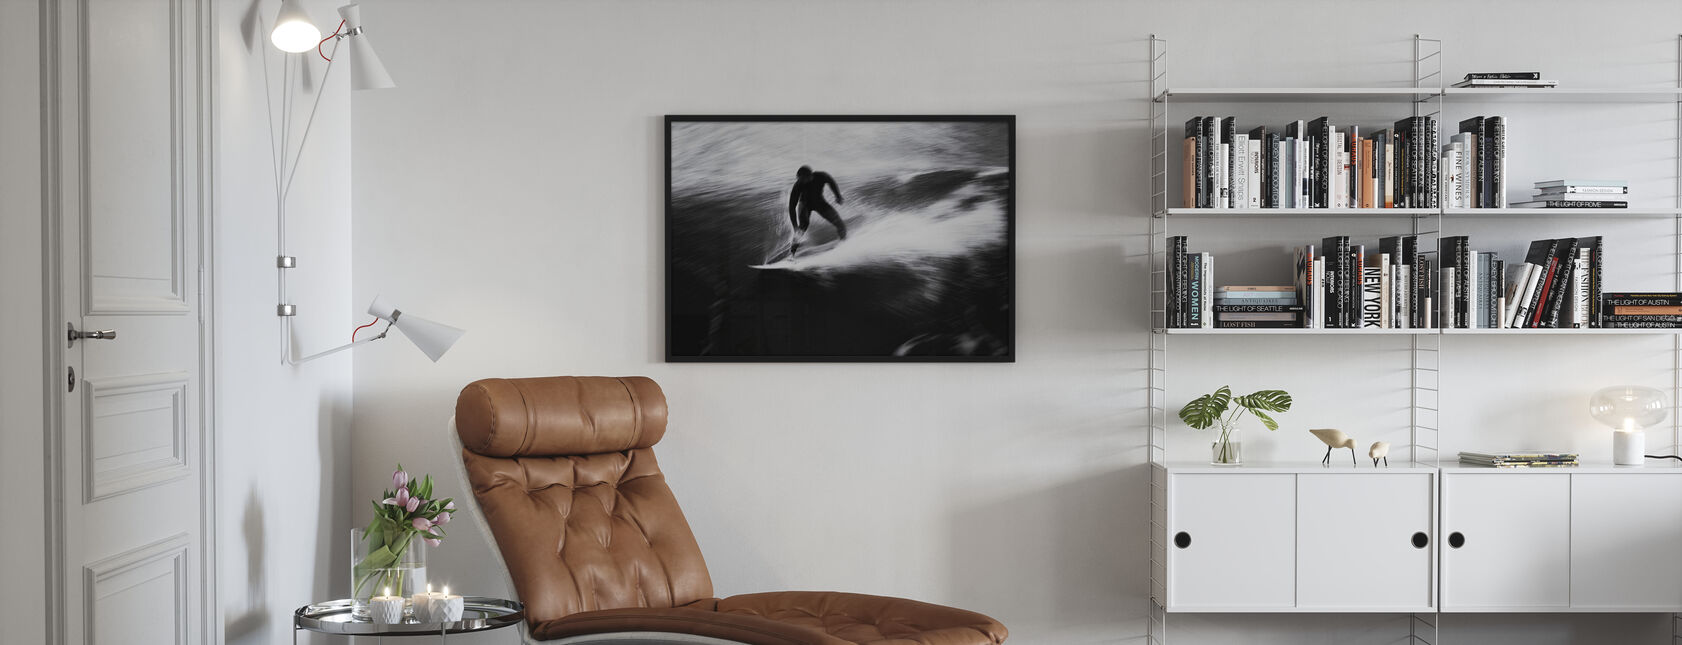 Surf - Poster - Living Room